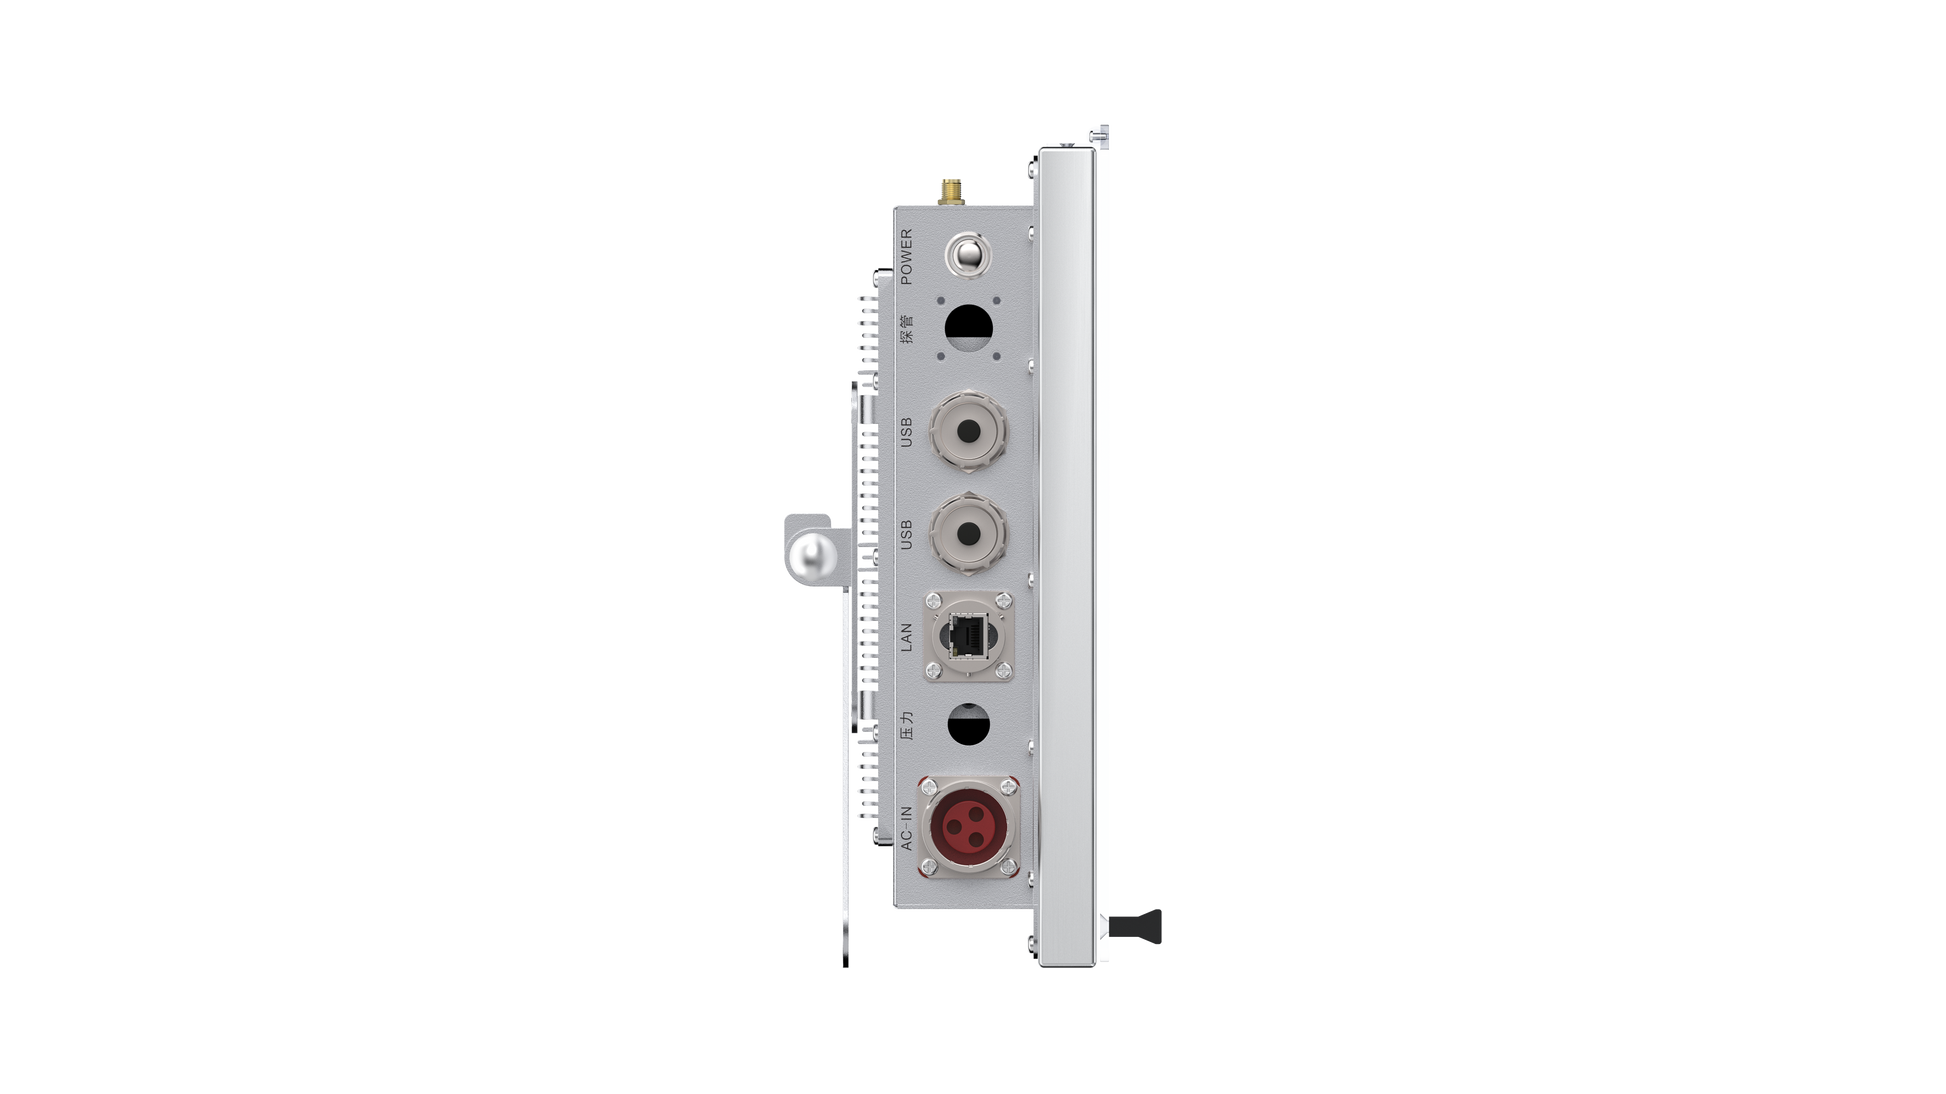 Darveen 12.1″ RPC-3120 IP65 WaterProof Panel PC with M12-IO